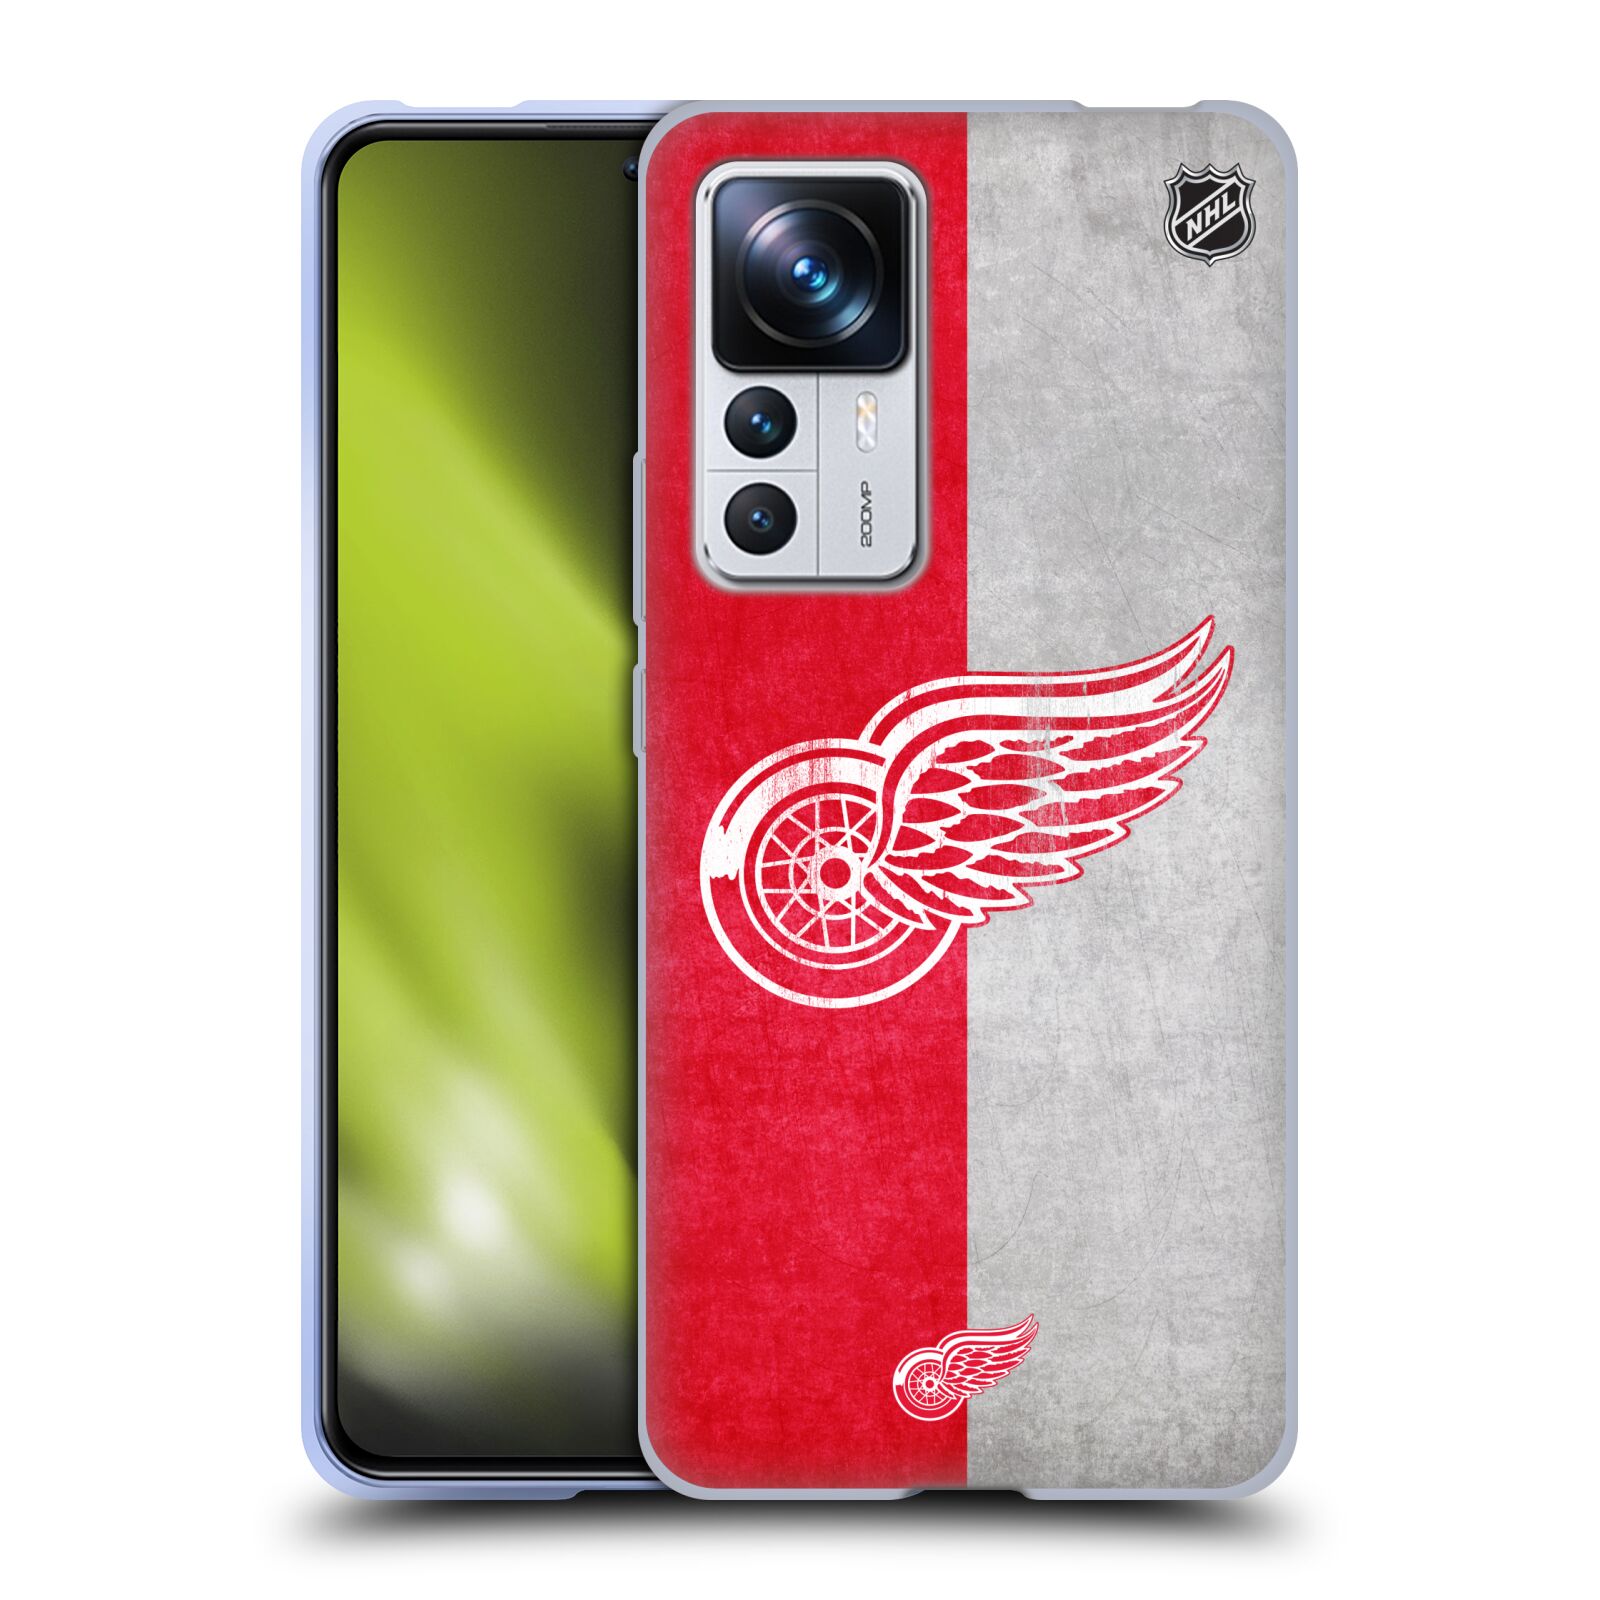 Silikonové pouzdro na mobil Xiaomi 12T / 12T Pro - NHL - Půlené logo Detroit Red Wings (Silikonový kryt, obal, pouzdro na mobilní telefon Xiaomi 12T / 12T Pro s licencovaným motivem NHL - Půlené logo Detroit Red Wings)